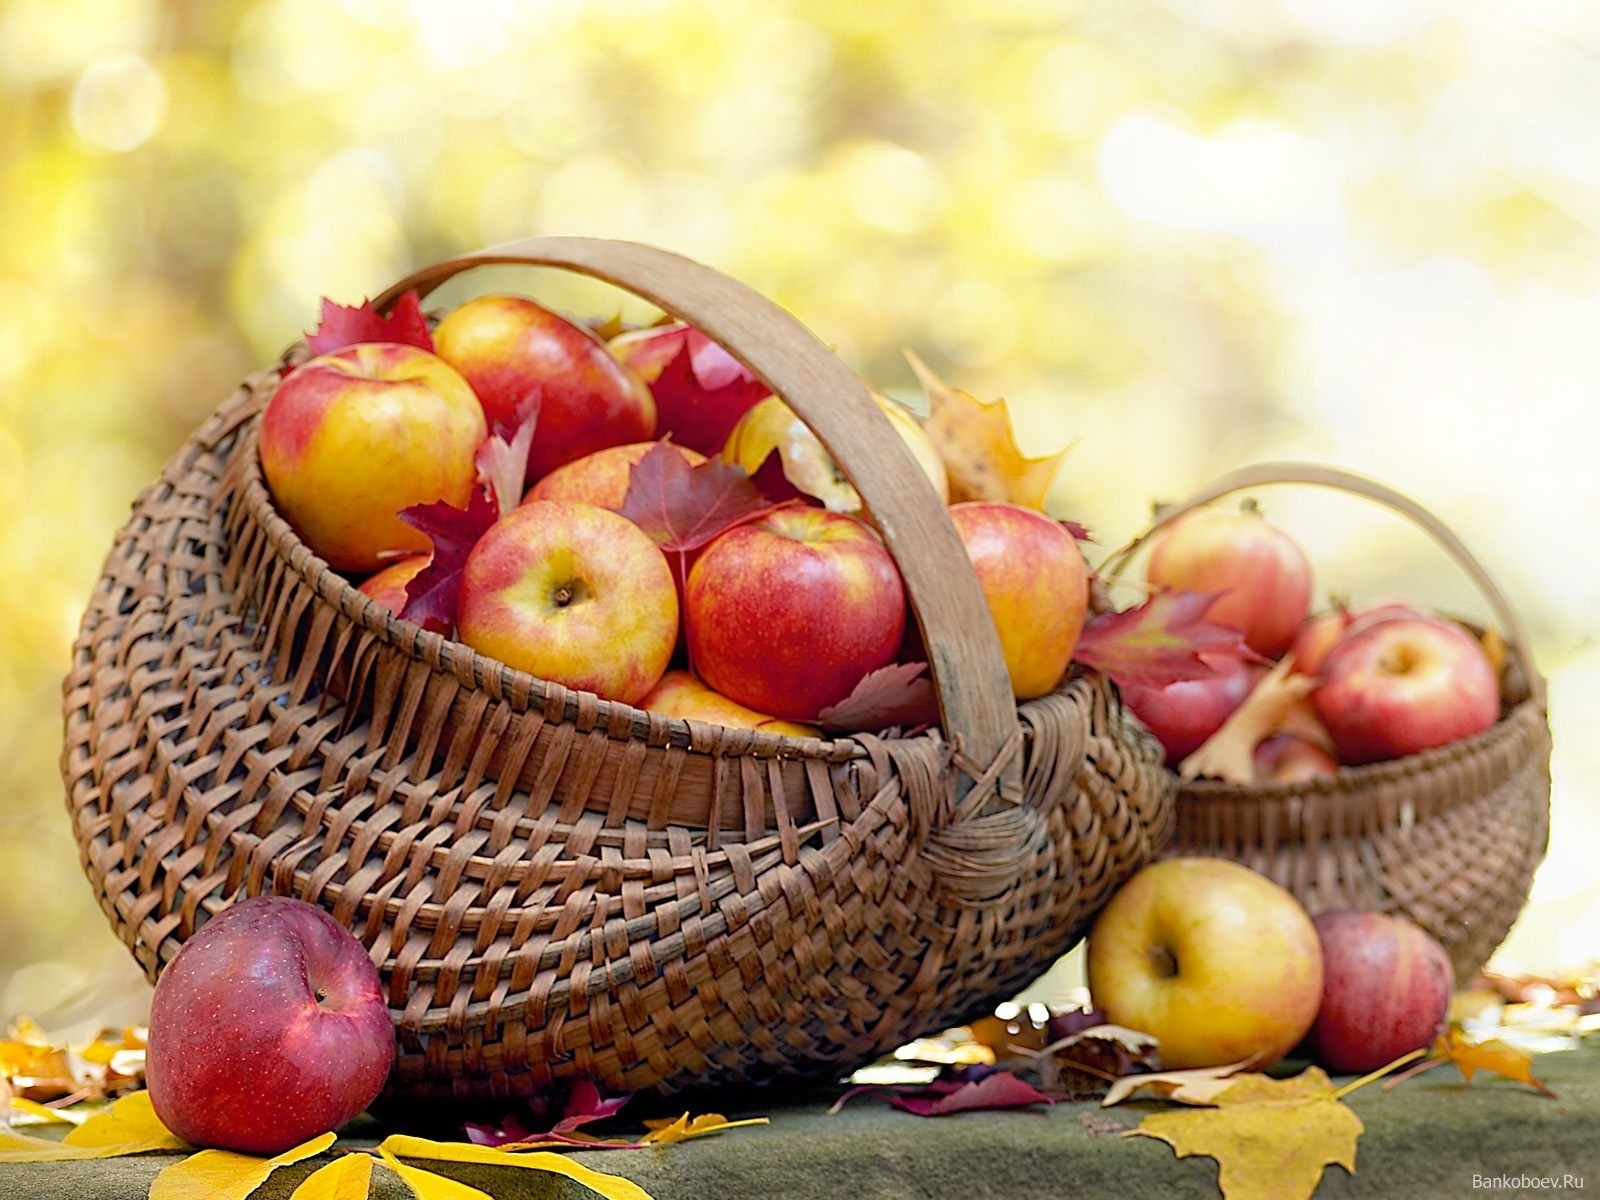 apples, fruits, food iphone wallpaper